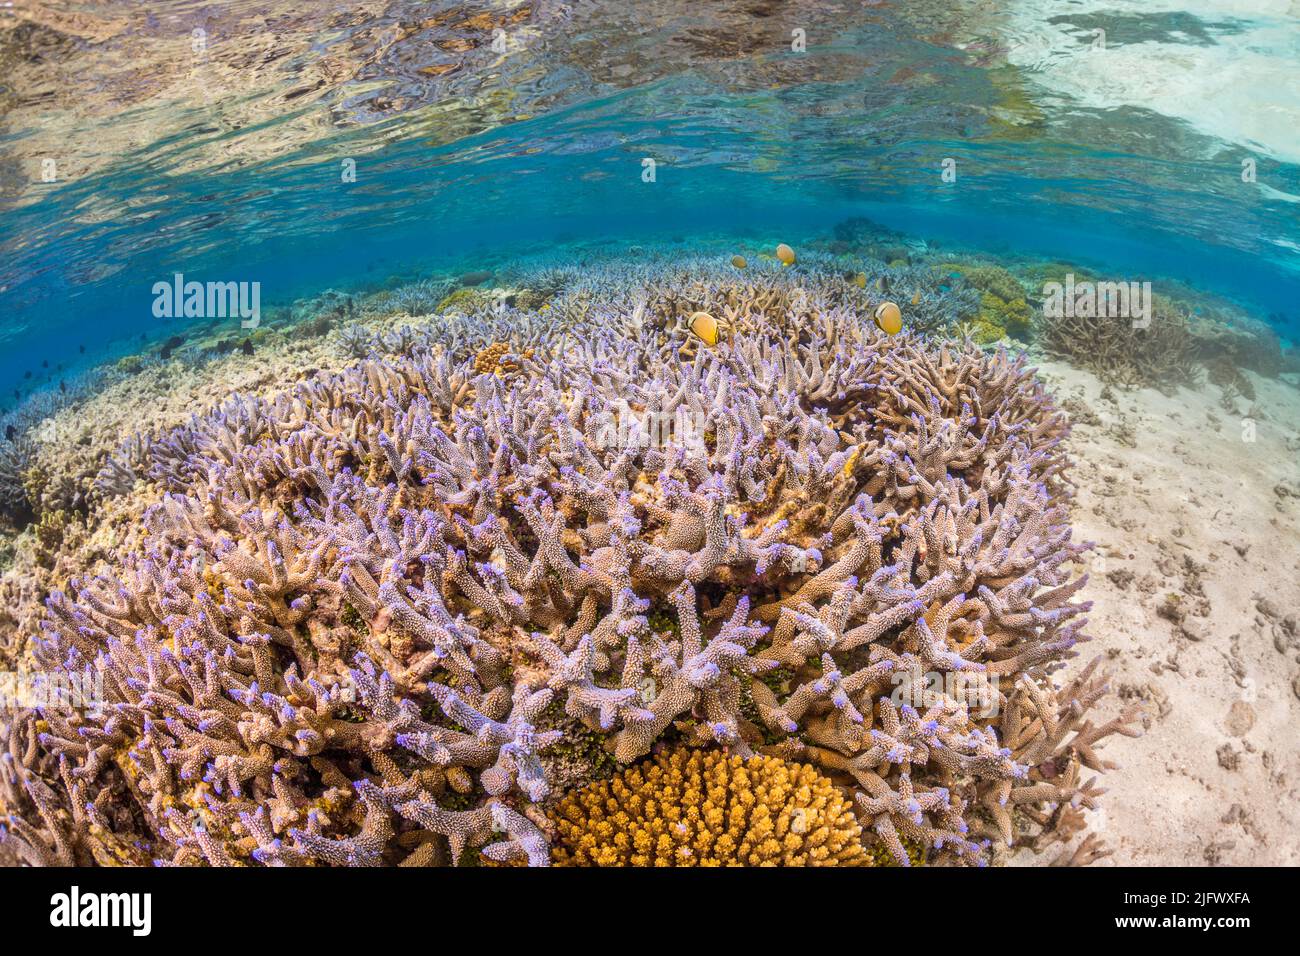 A shallow water hard coral reef scene off the island of Kadavu, Fiji. Stock Photo